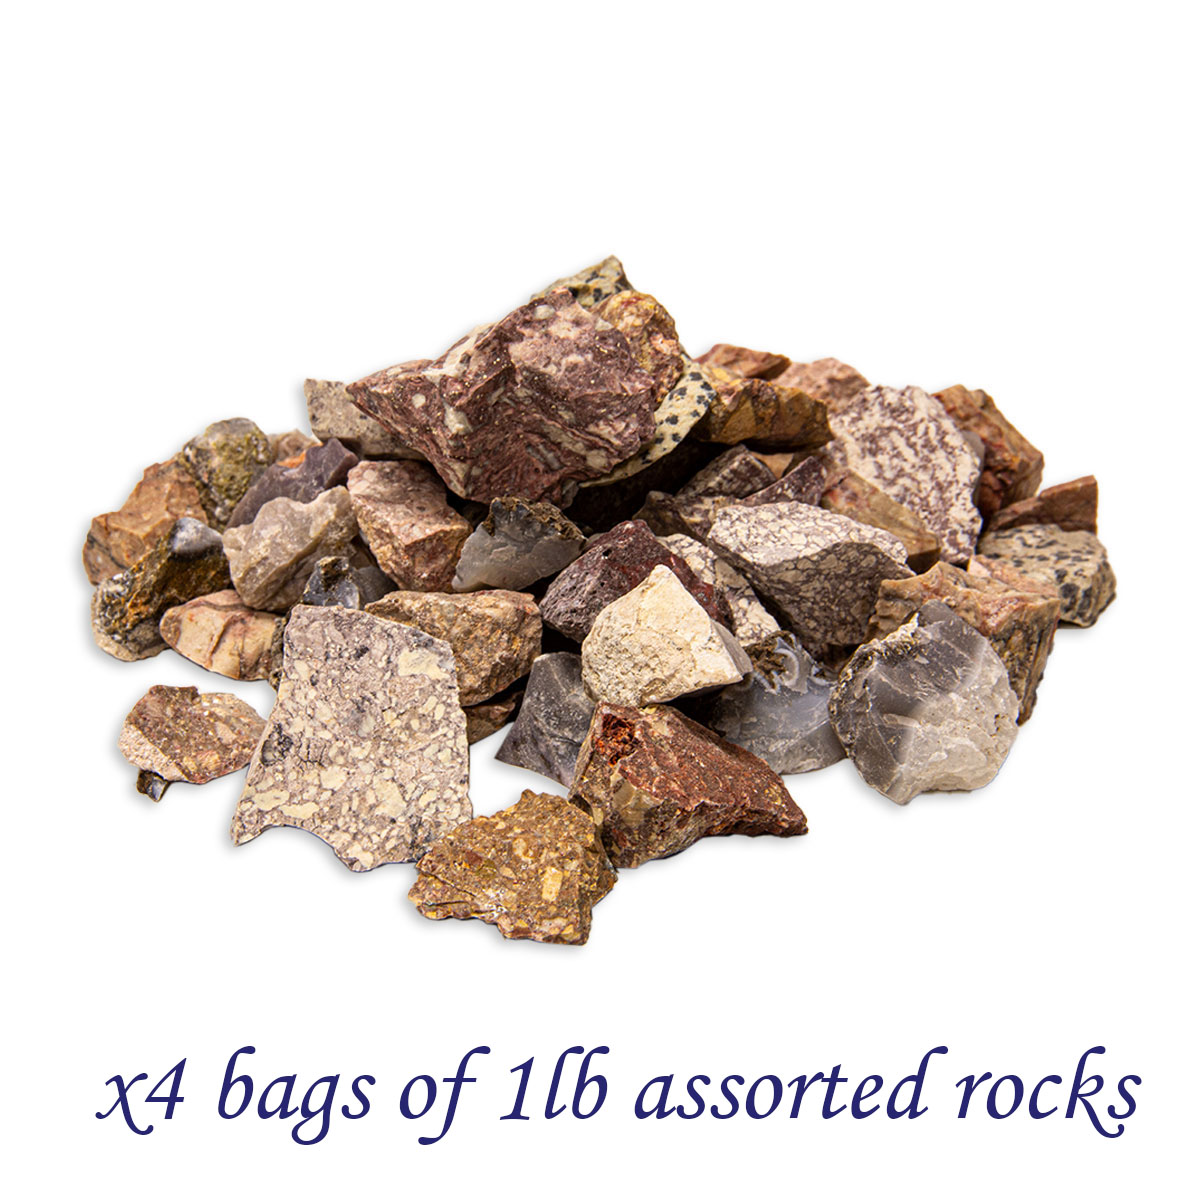 Rock Tumblers For Polished Gemstones: Single & Double Barrel Kits 